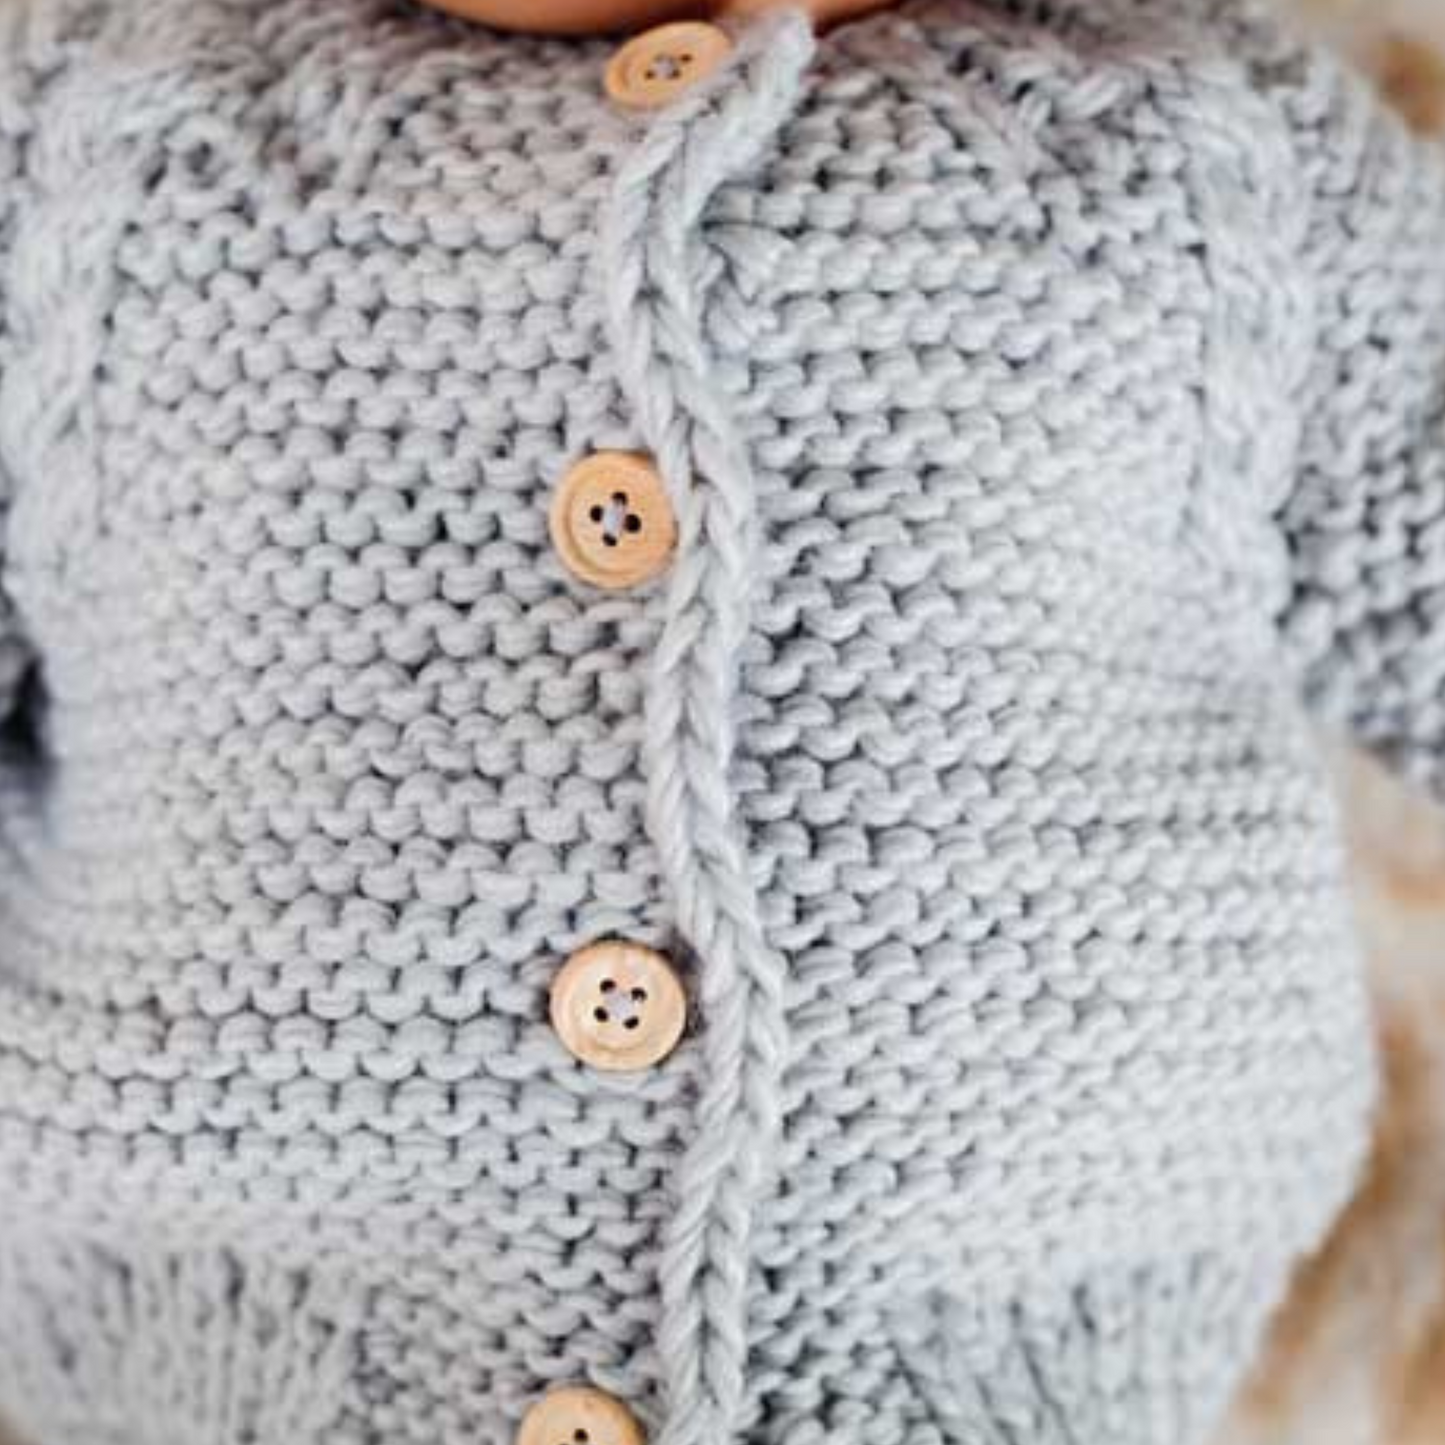 Garter Stitch Cardigan Sweater, Ice Grey